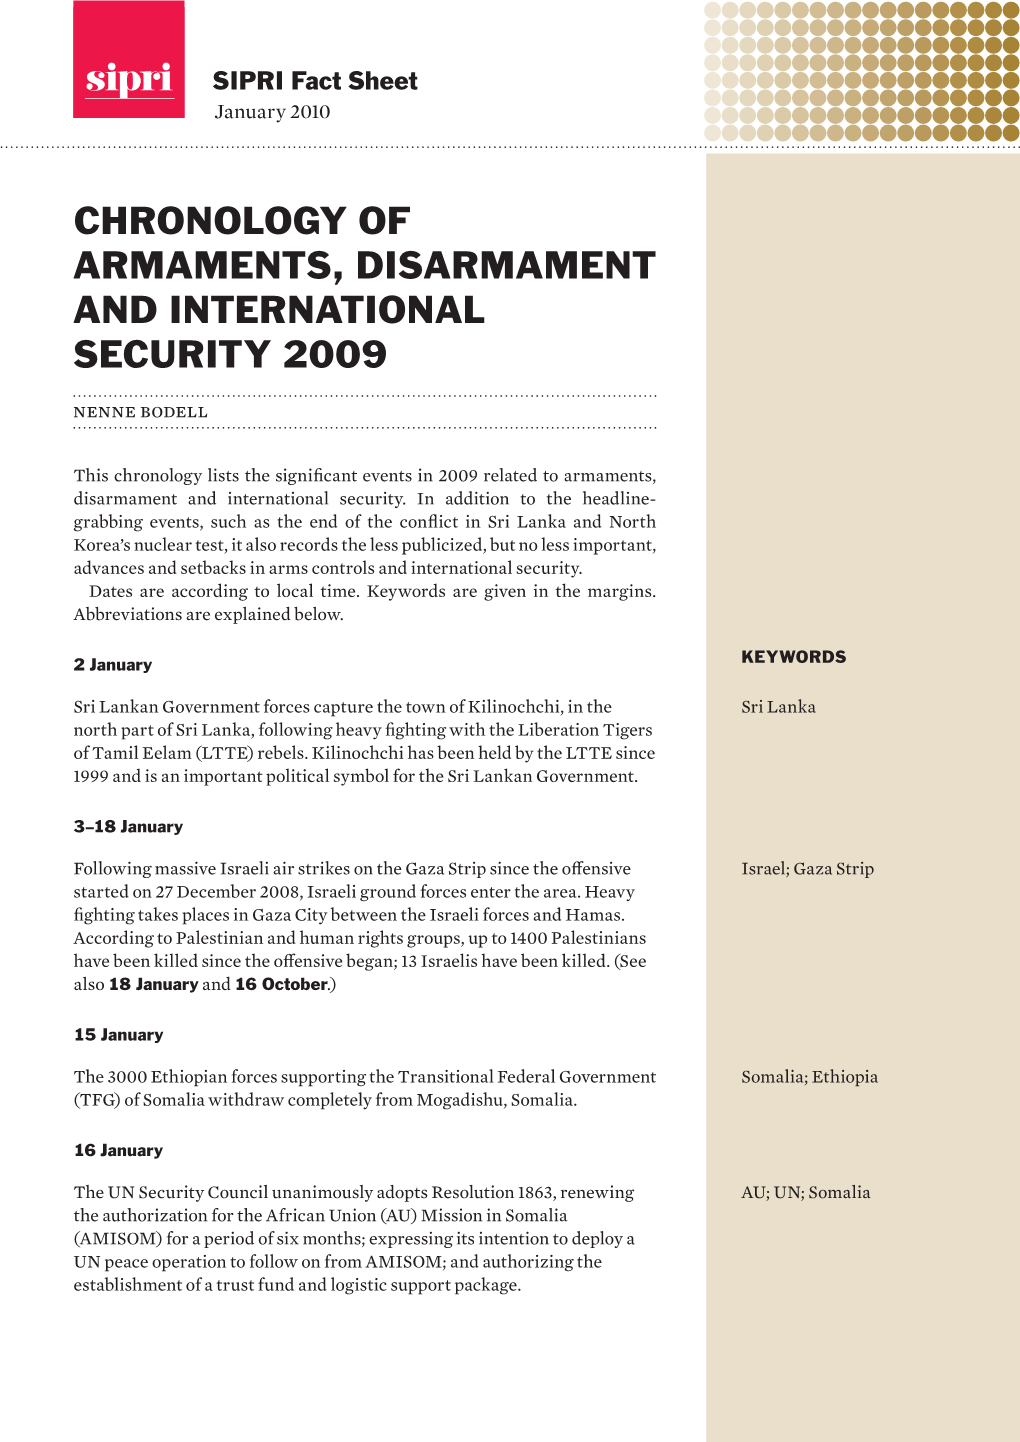 Chronologo of Armaments, Disarmament and International Security 2009, SIPRI Fact Sheet